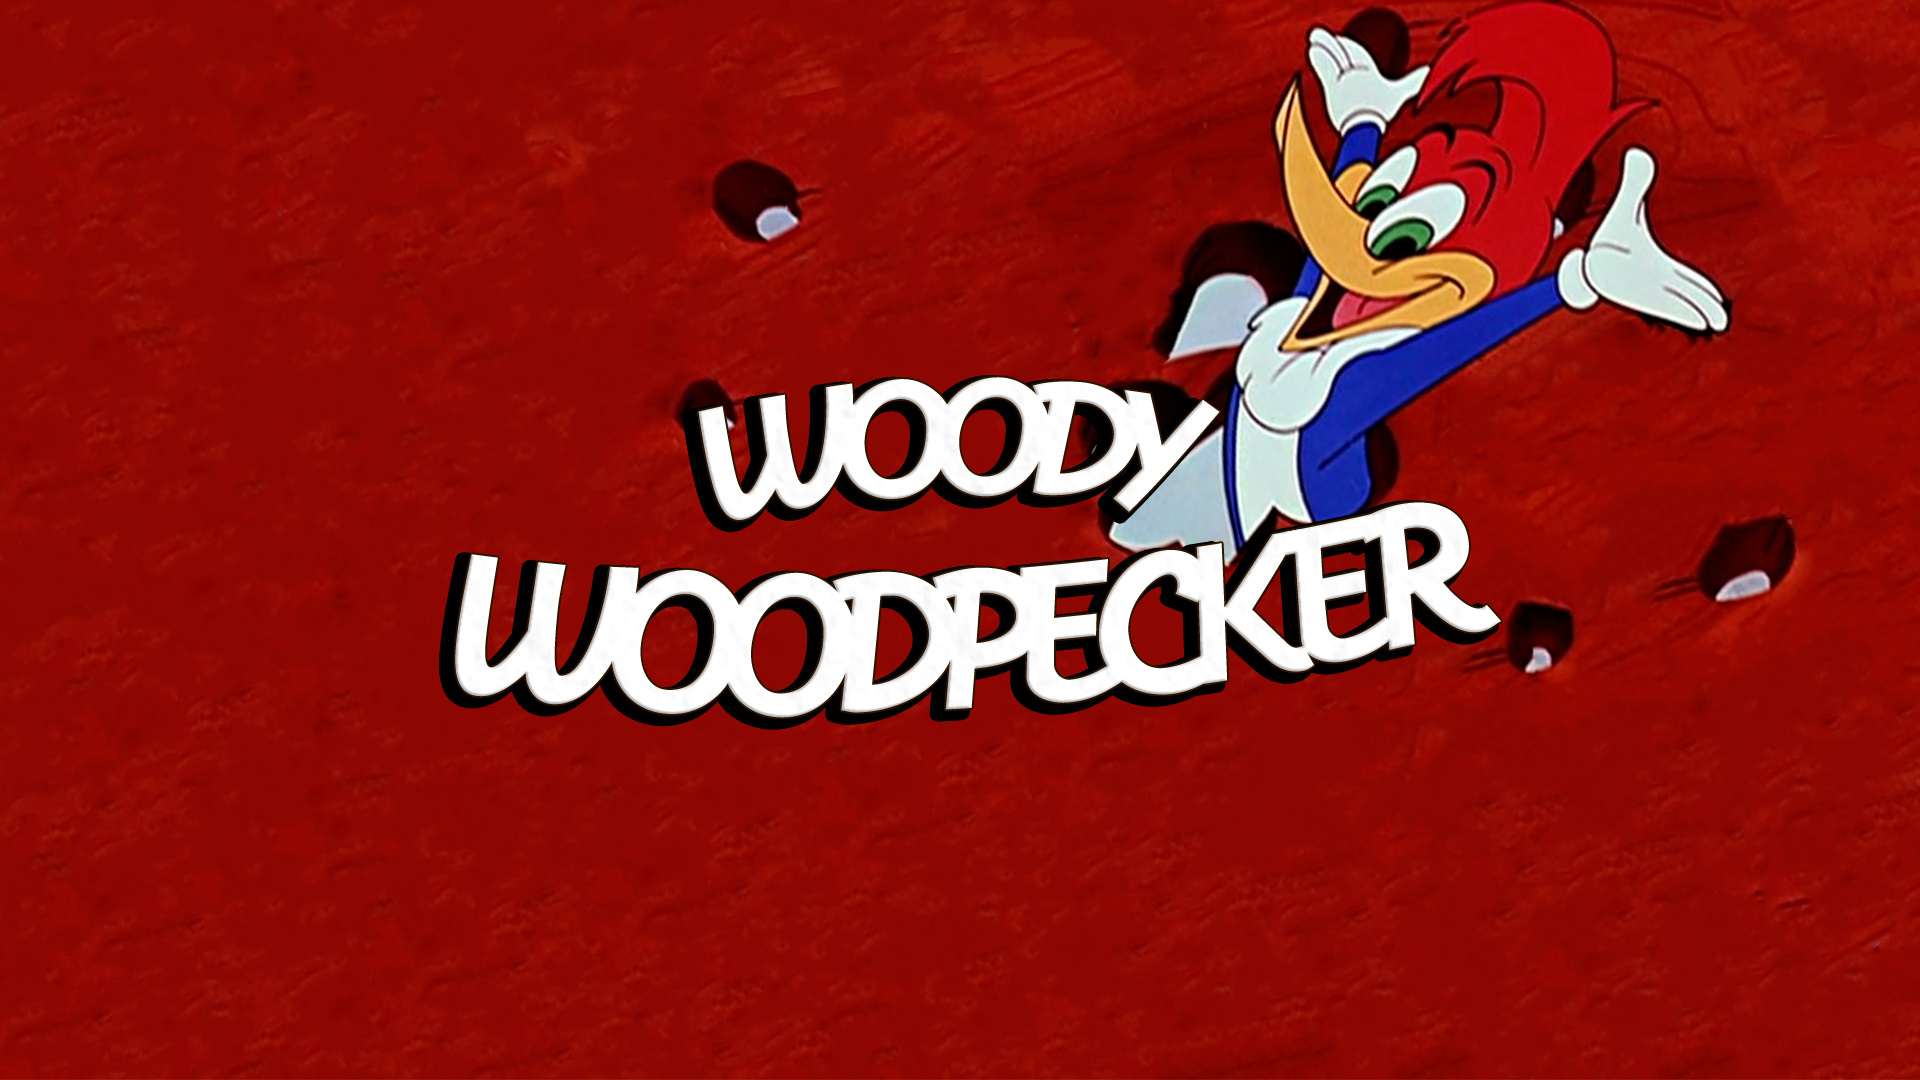 Woody Woodpecker, Cartoon show, Mobile programs, Animated character, 1920x1080 Full HD Desktop